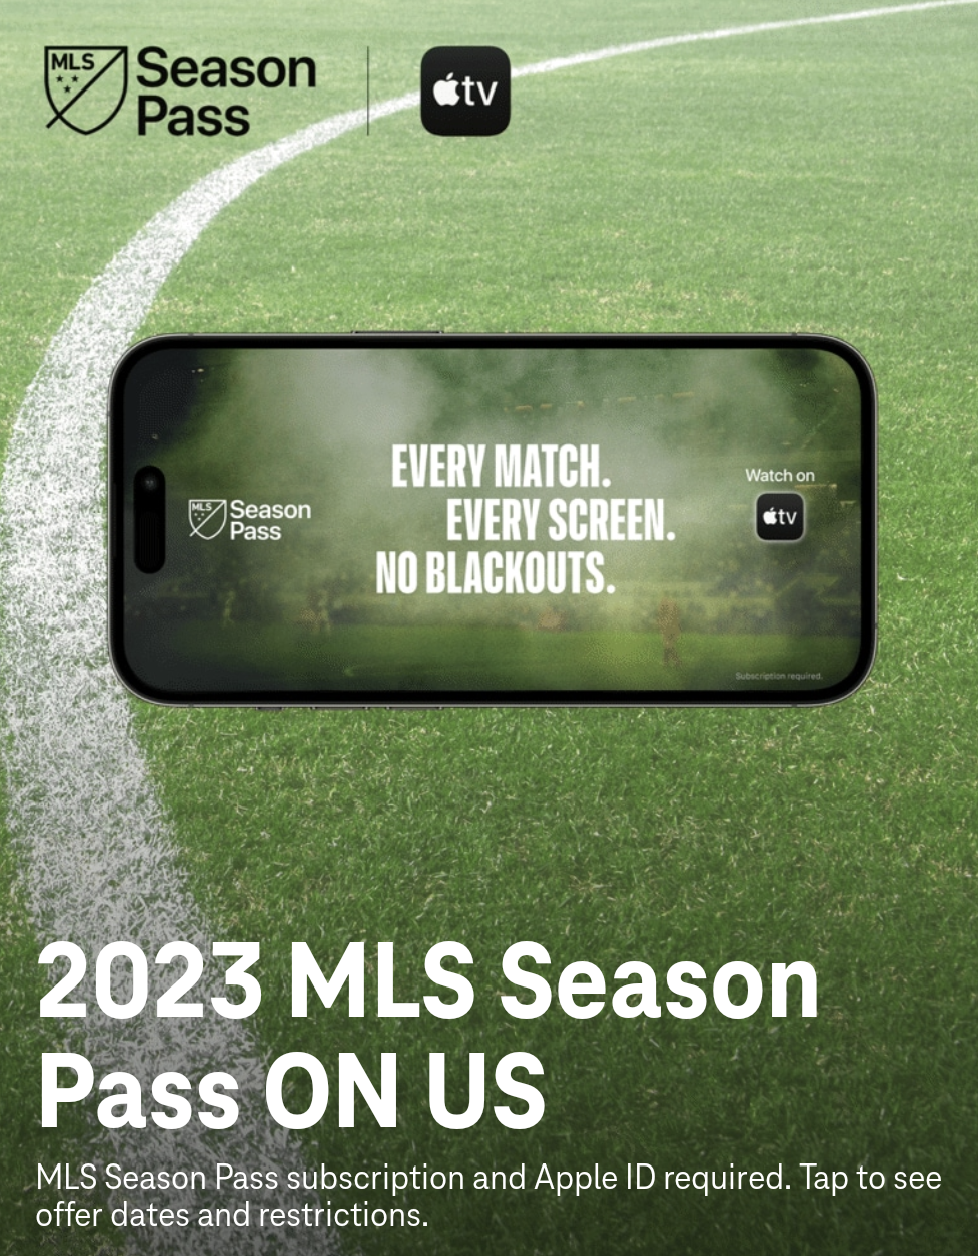 TMobile Tuesdays Offering Free 2023 MLS Season Pass LaptrinhX / News